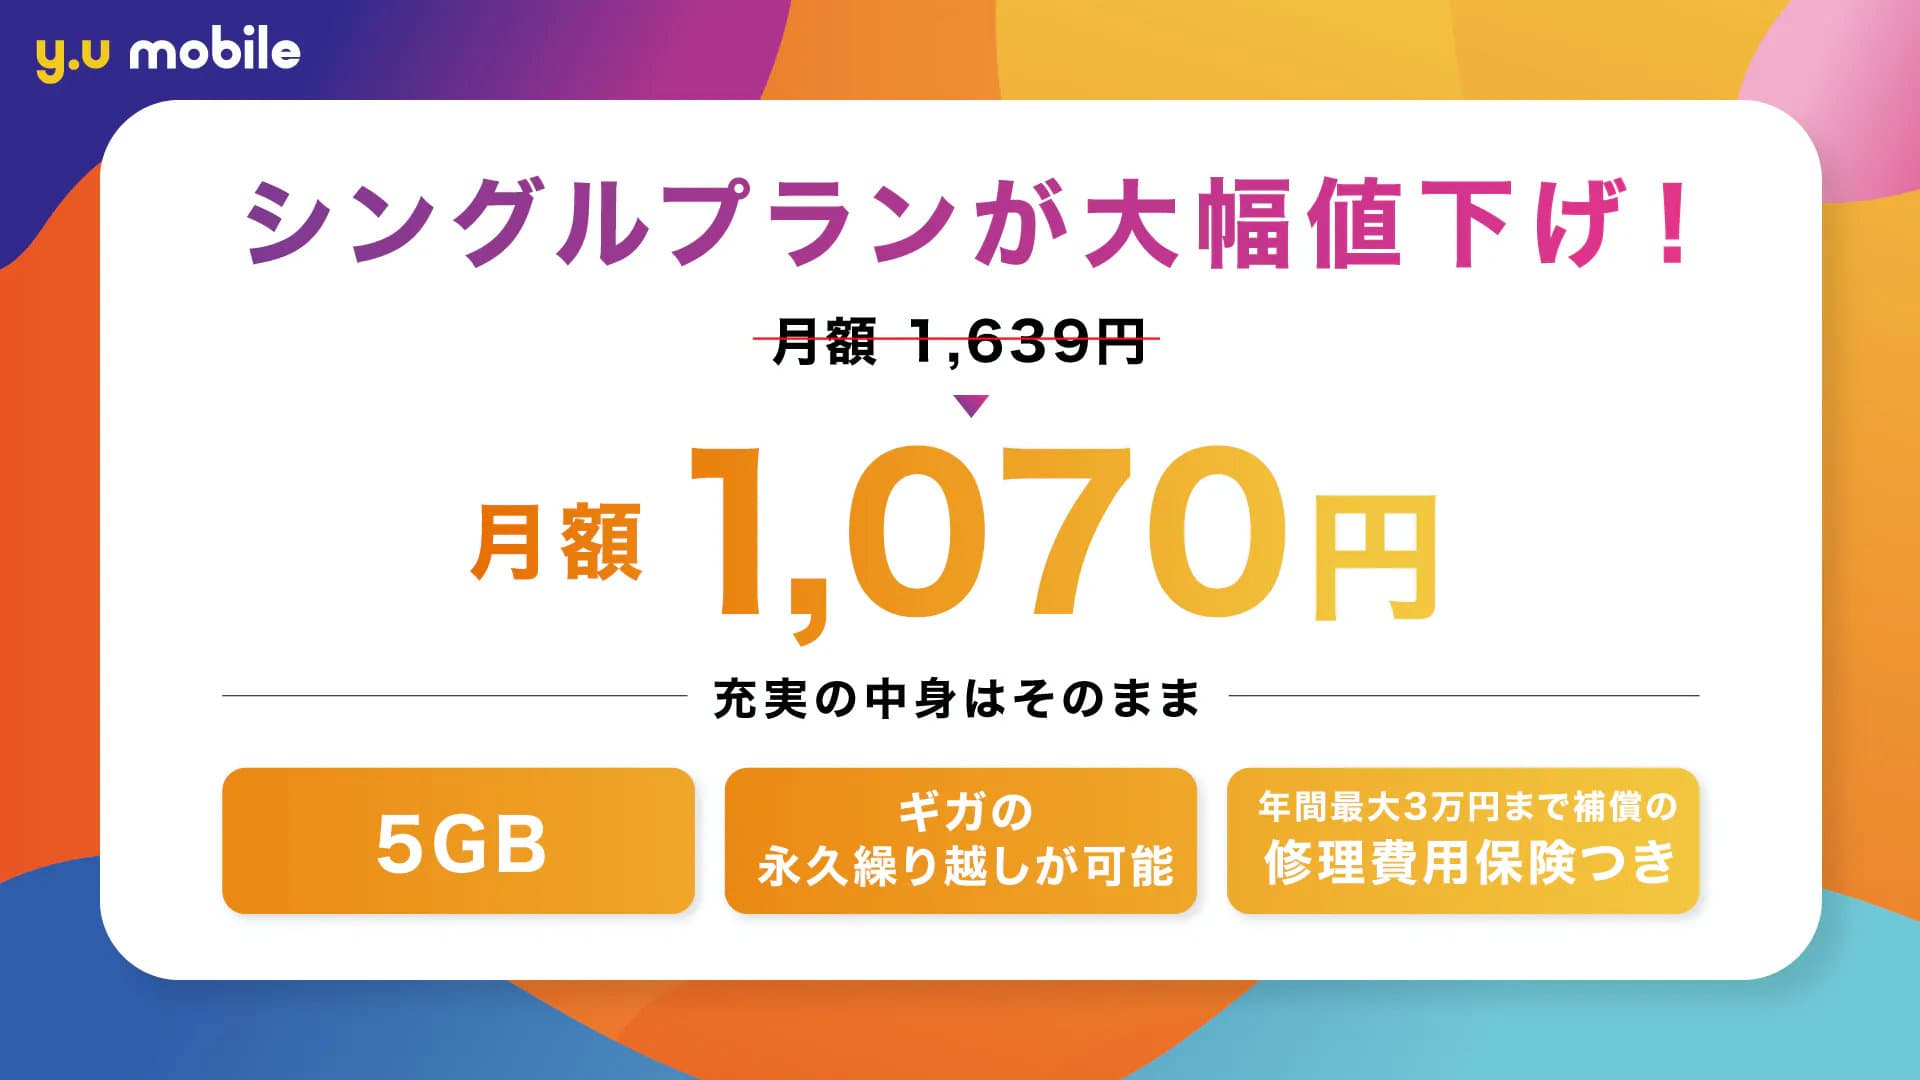 y.u mobile シングルプランが大幅値下げ！月額1,070円